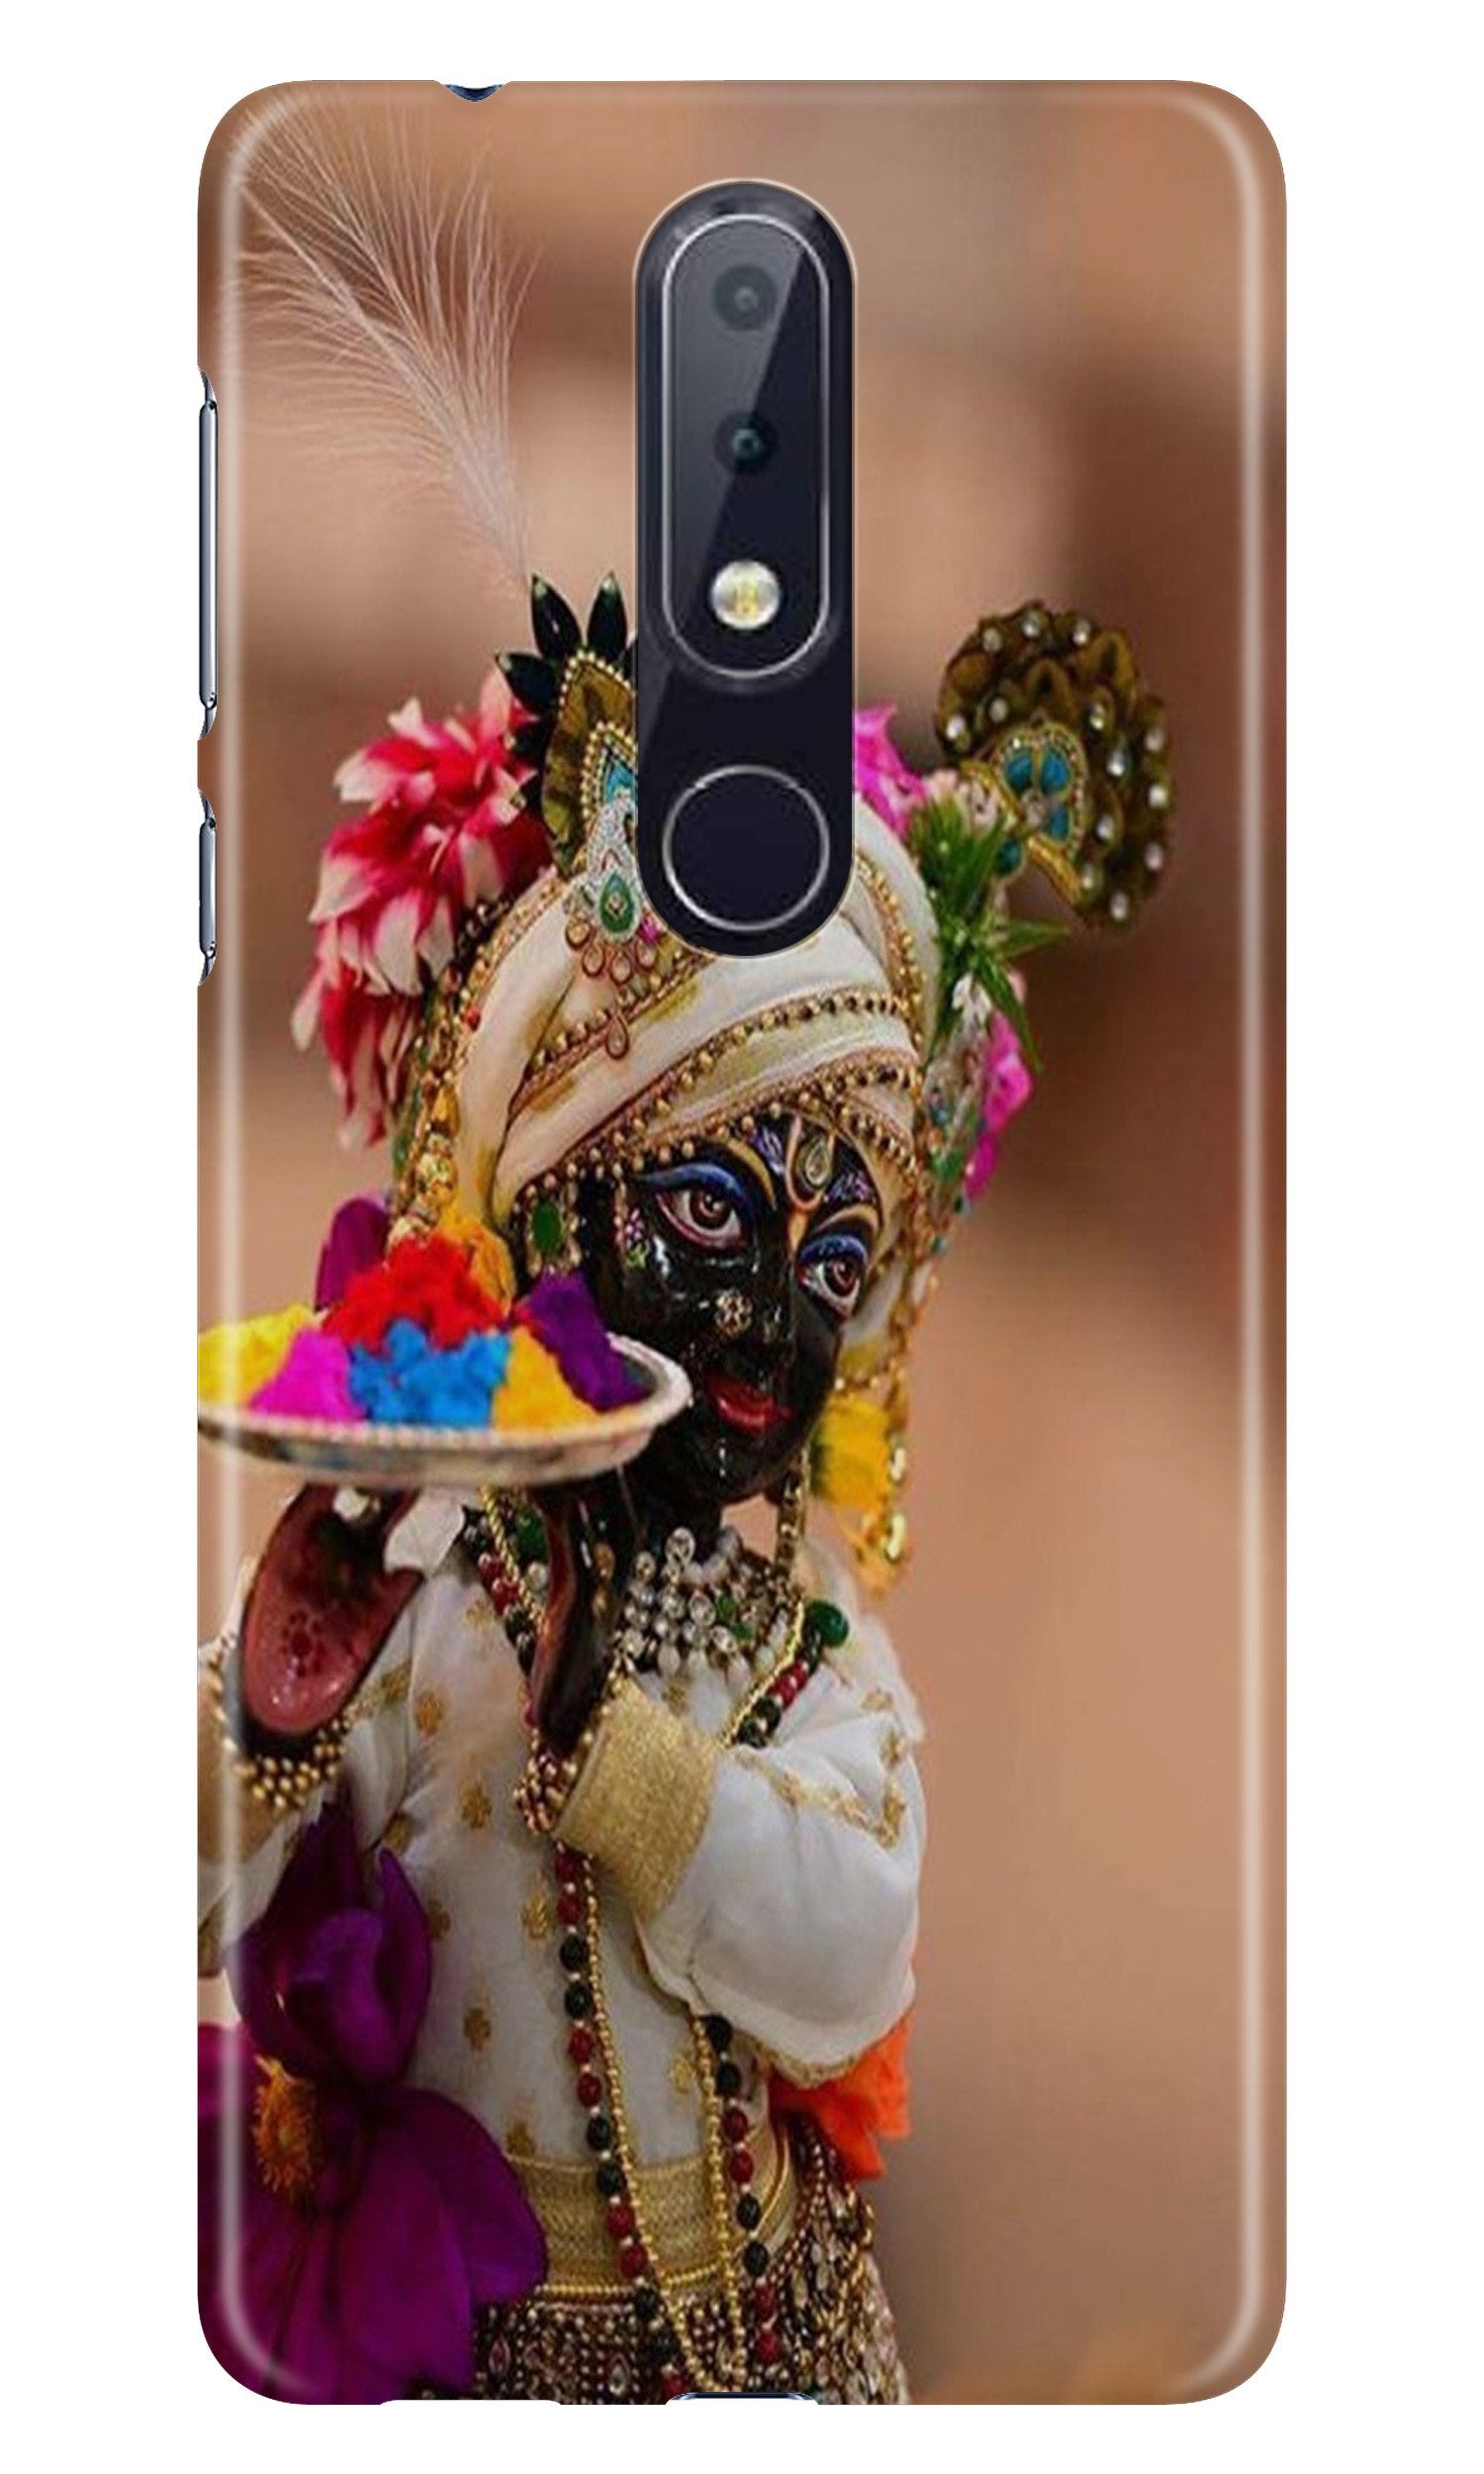 Lord Krishna2 Case for Nokia 6.1 Plus